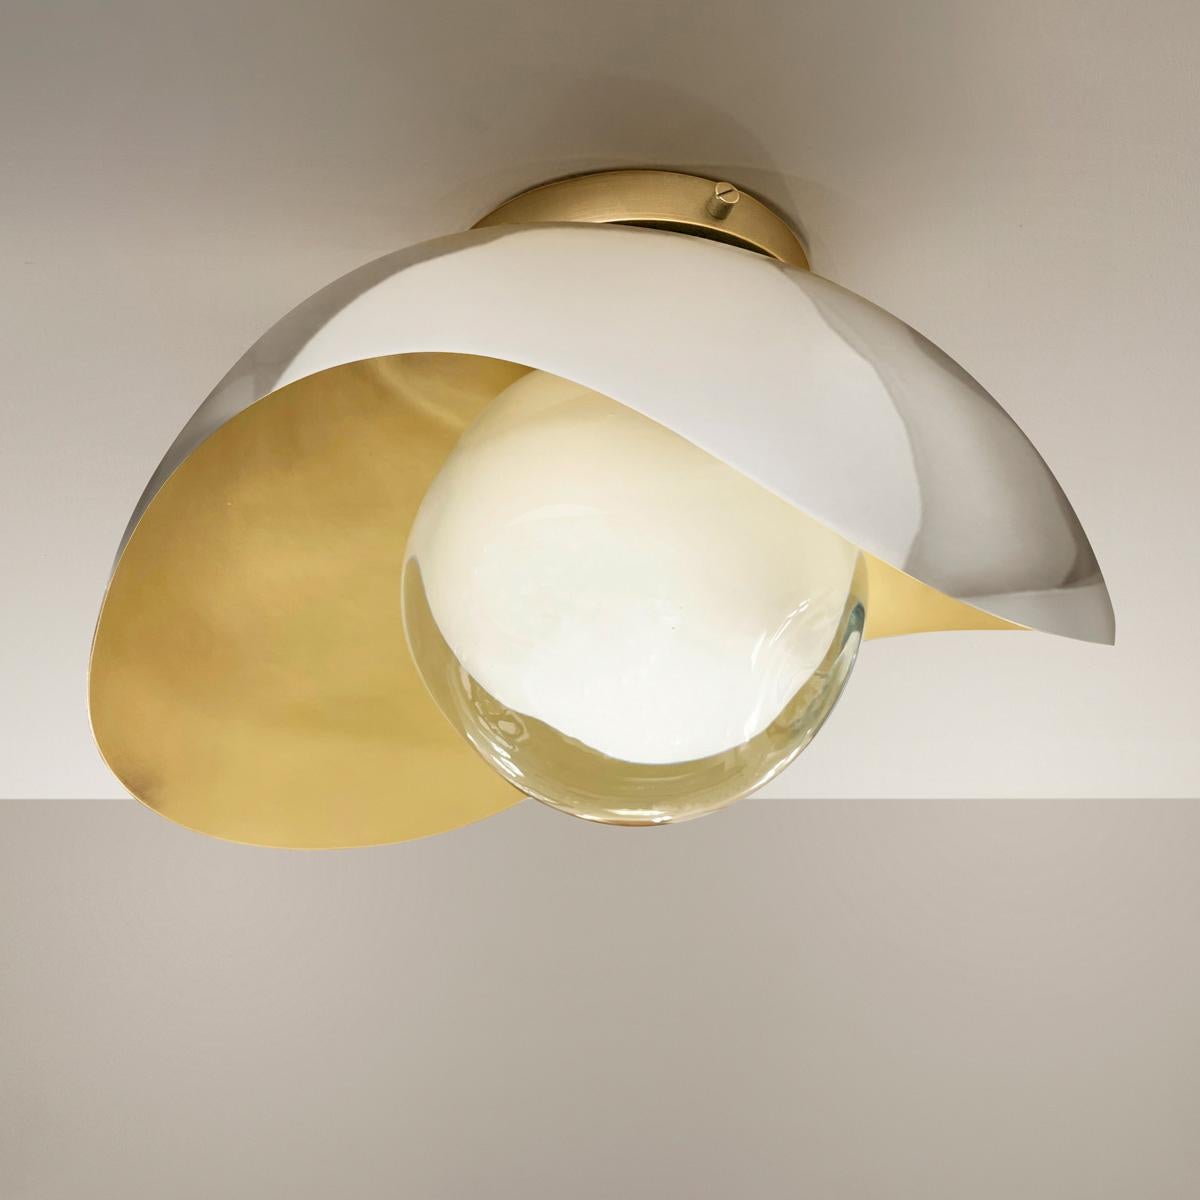 Perla Flushmount Ceiling Light by Gaspare Asaro-Satin Brass/Bronze Finish. For Sale 2